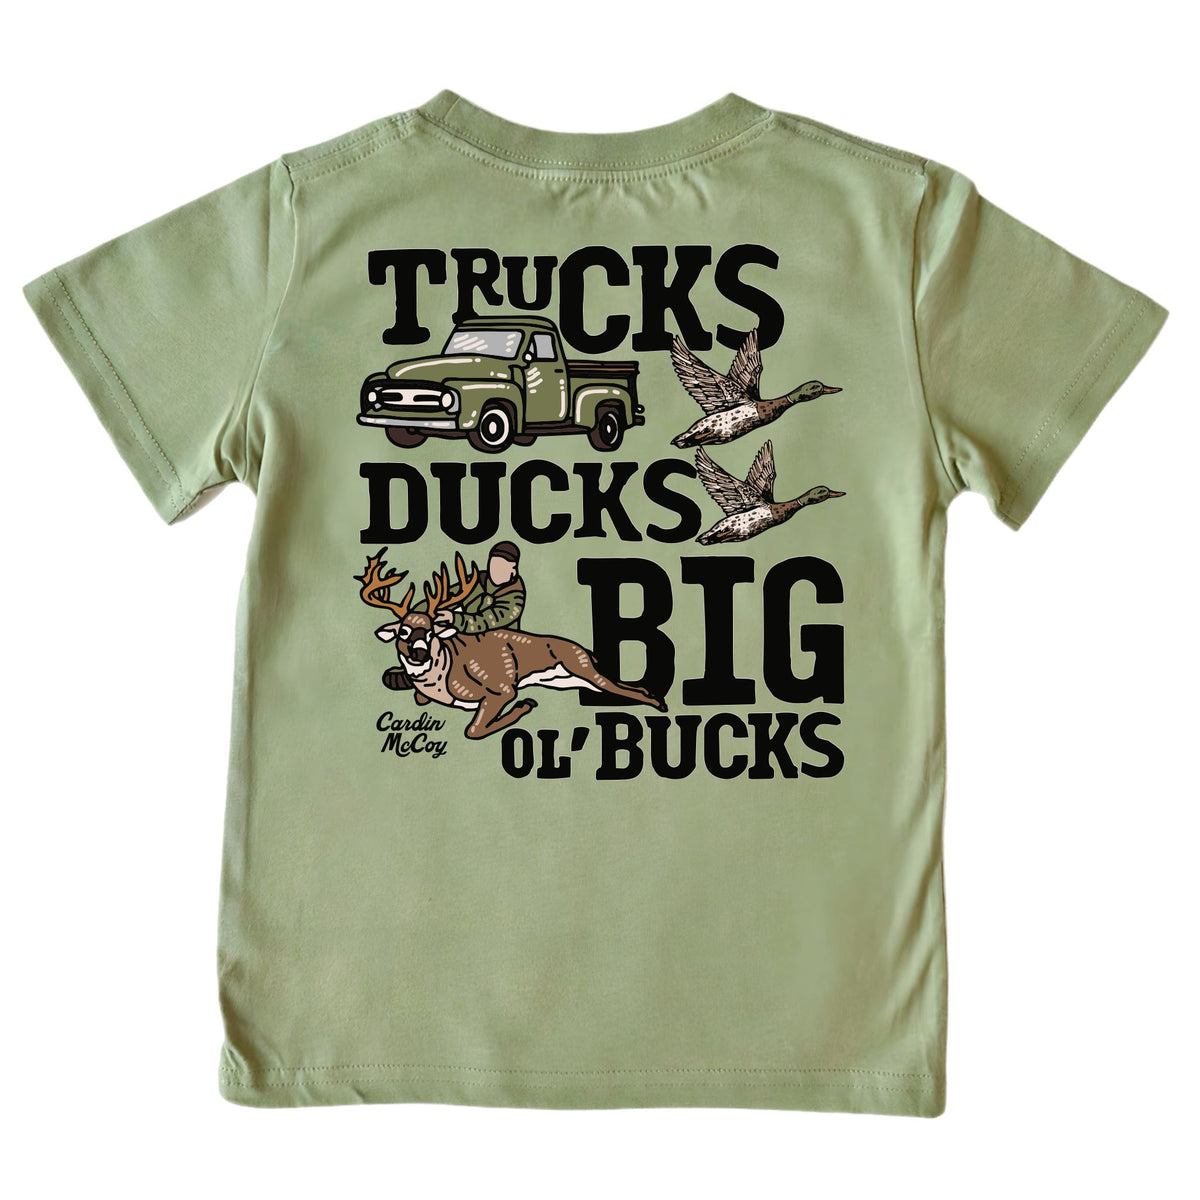 Boys' Trucks, Ducks & Bucks Short-Sleeve Tee Short Sleeve T-Shirt Cardin McCoy Light Olive XXS (2/3) Pocket